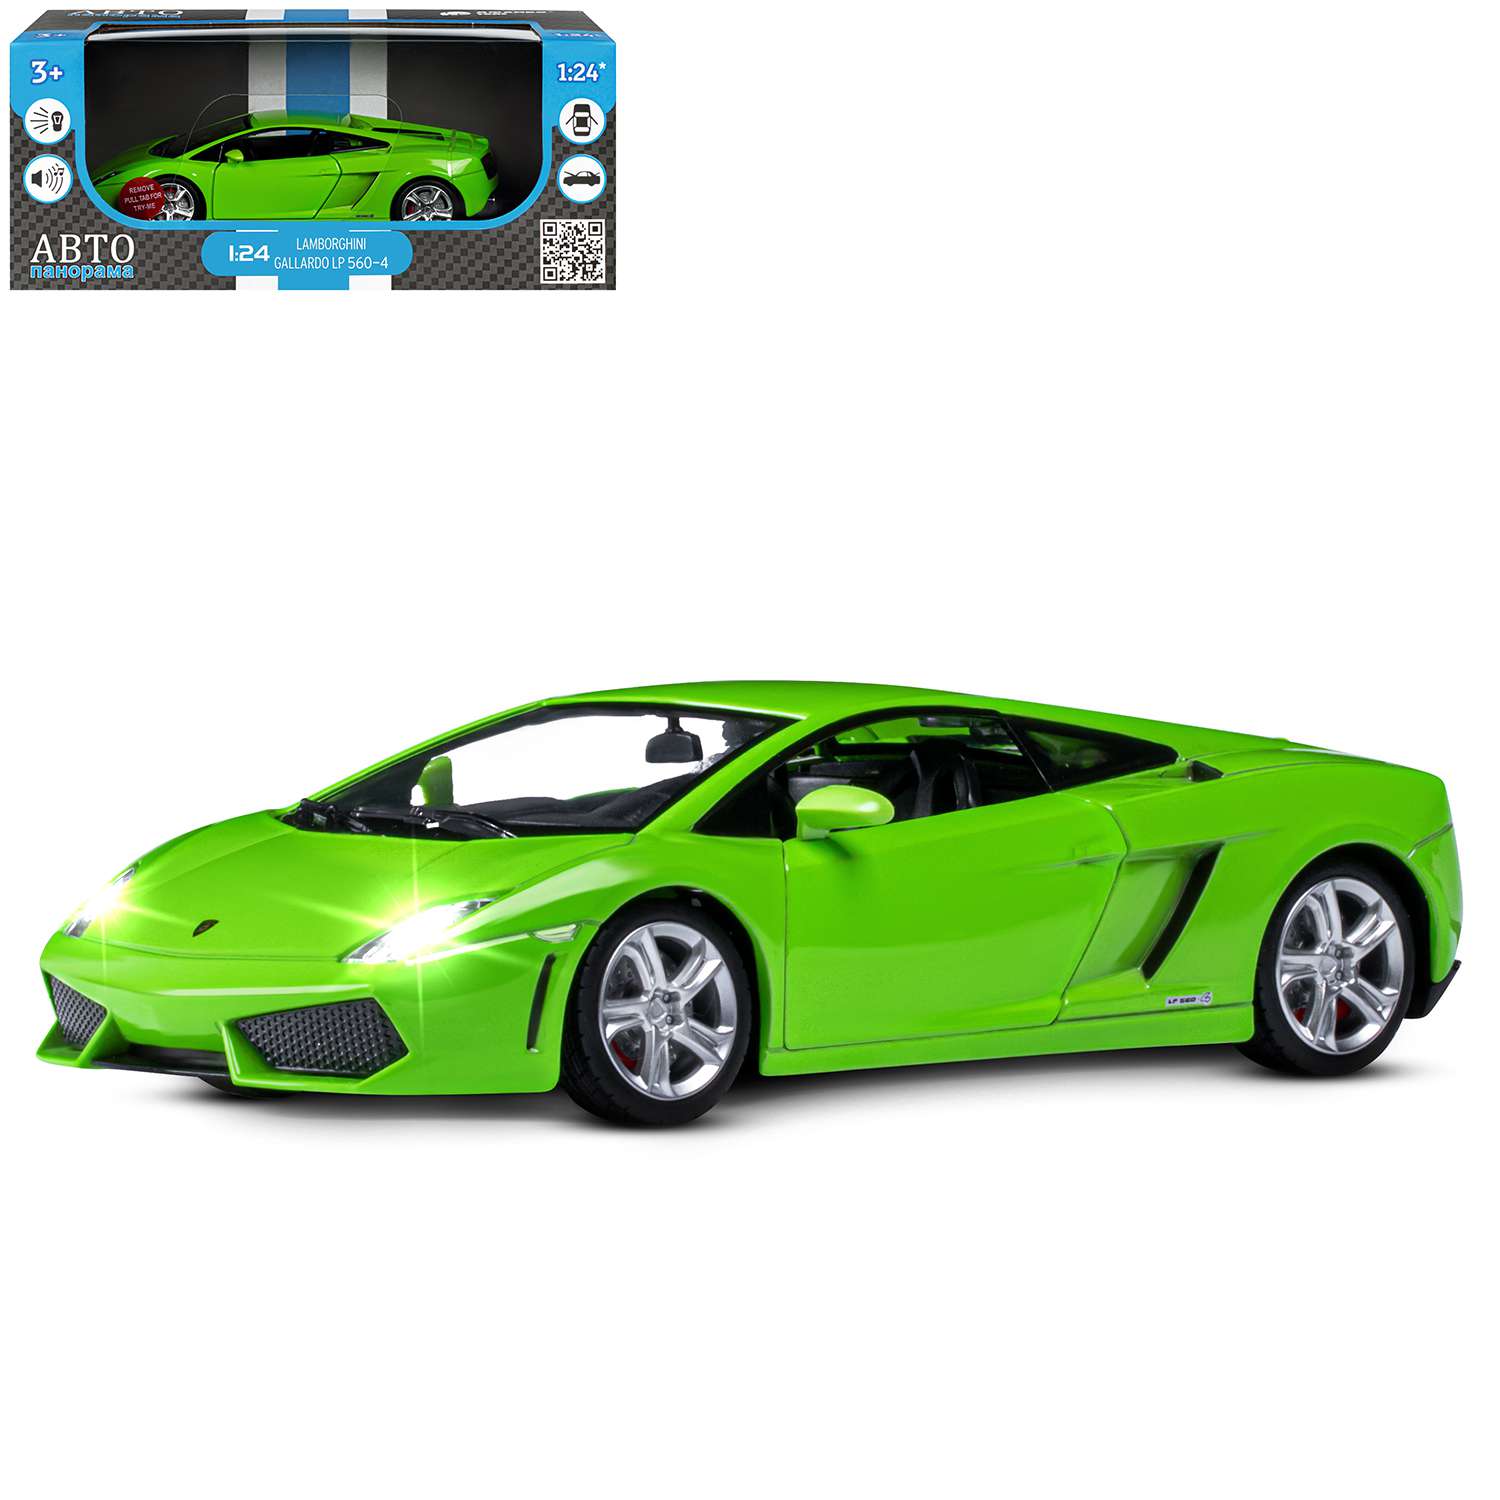 Машина JB1251382 Lamborghini Gallardo LP560-4 металл 1:24 зеленый свет, звук ТМ Автопанорама - Пенза 